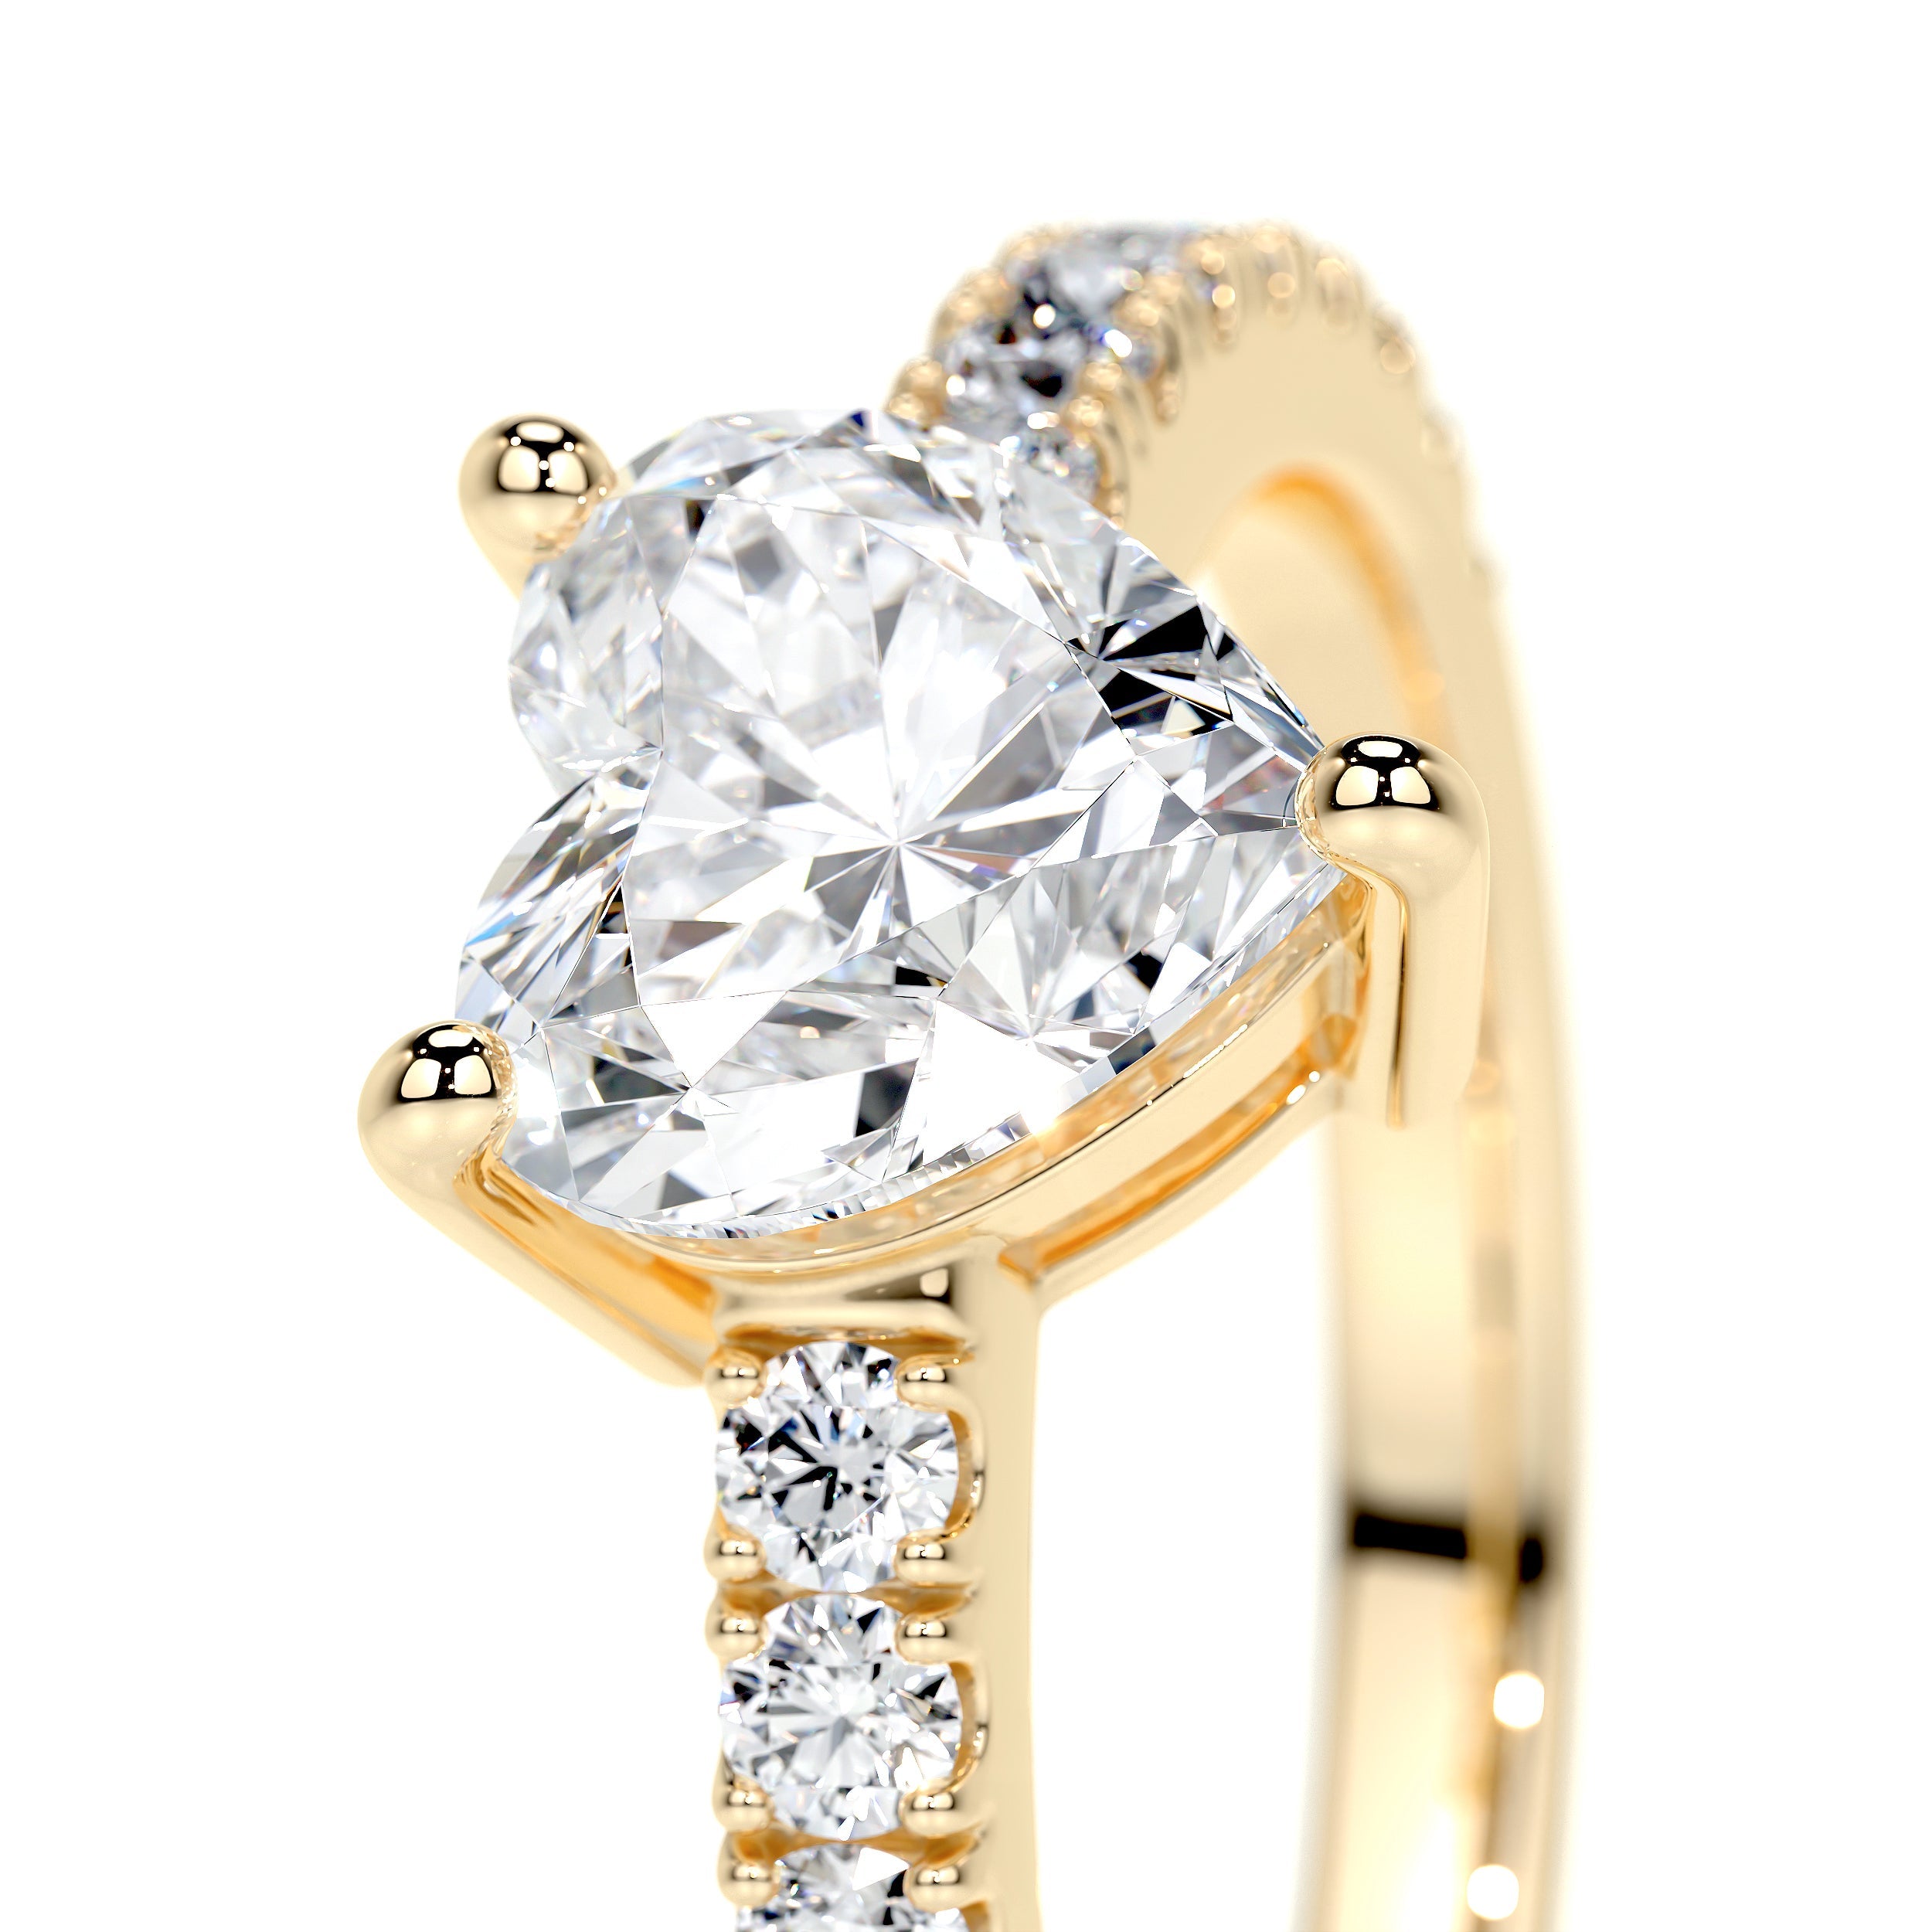 Audrey Lab Grown Diamond Ring   (1.3 Carat) -18K Yellow Gold